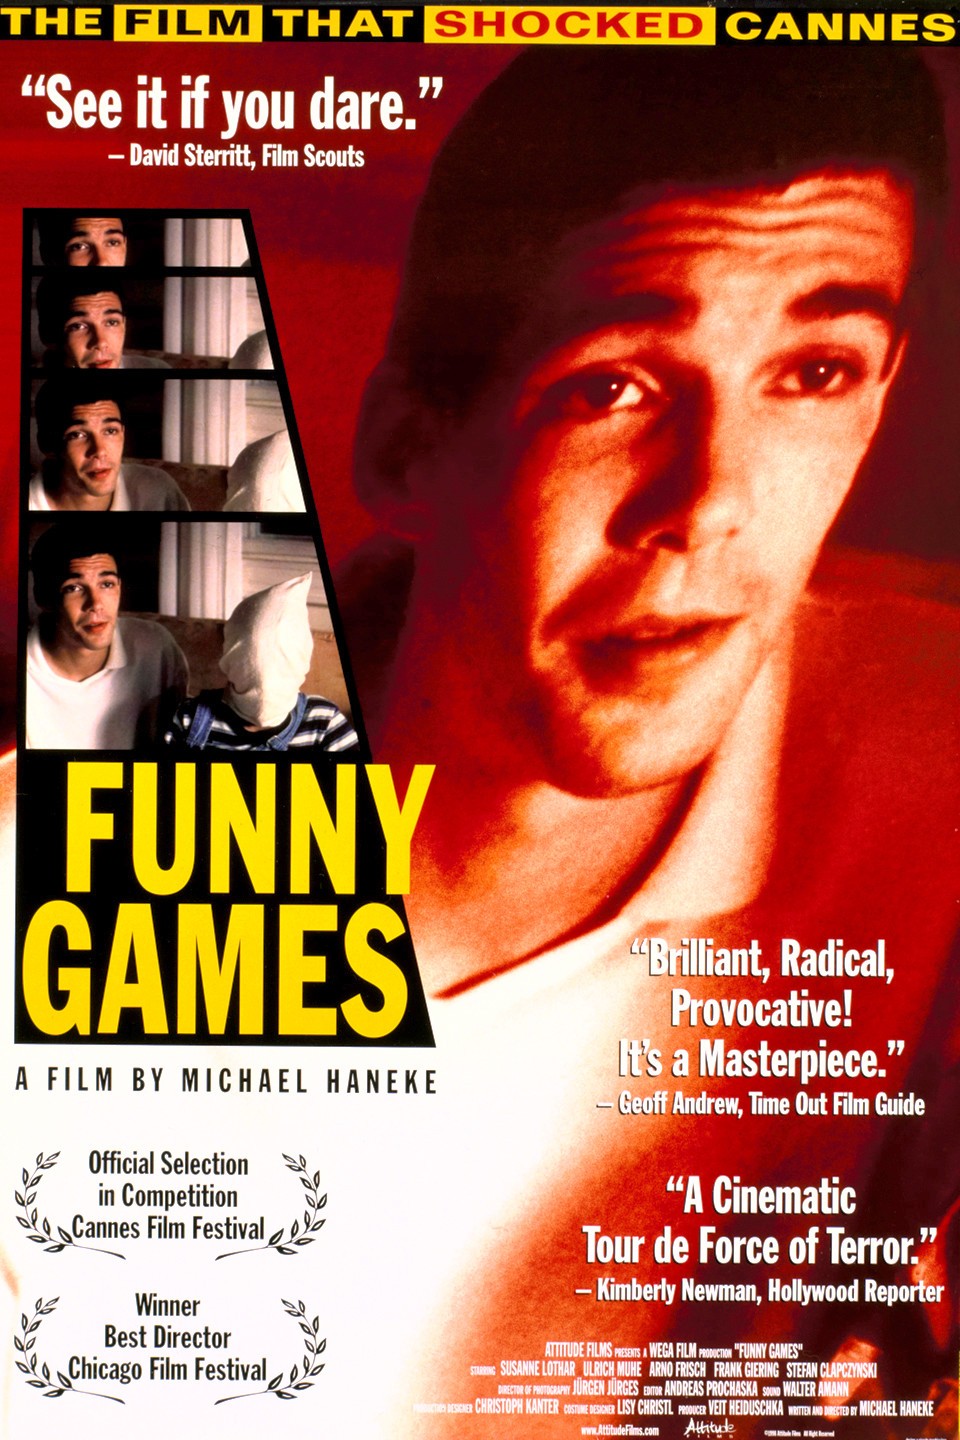 Funny Games (1997) - Michael Haneke, Susanne Lothar, Ulrich Muhe DVD NEW